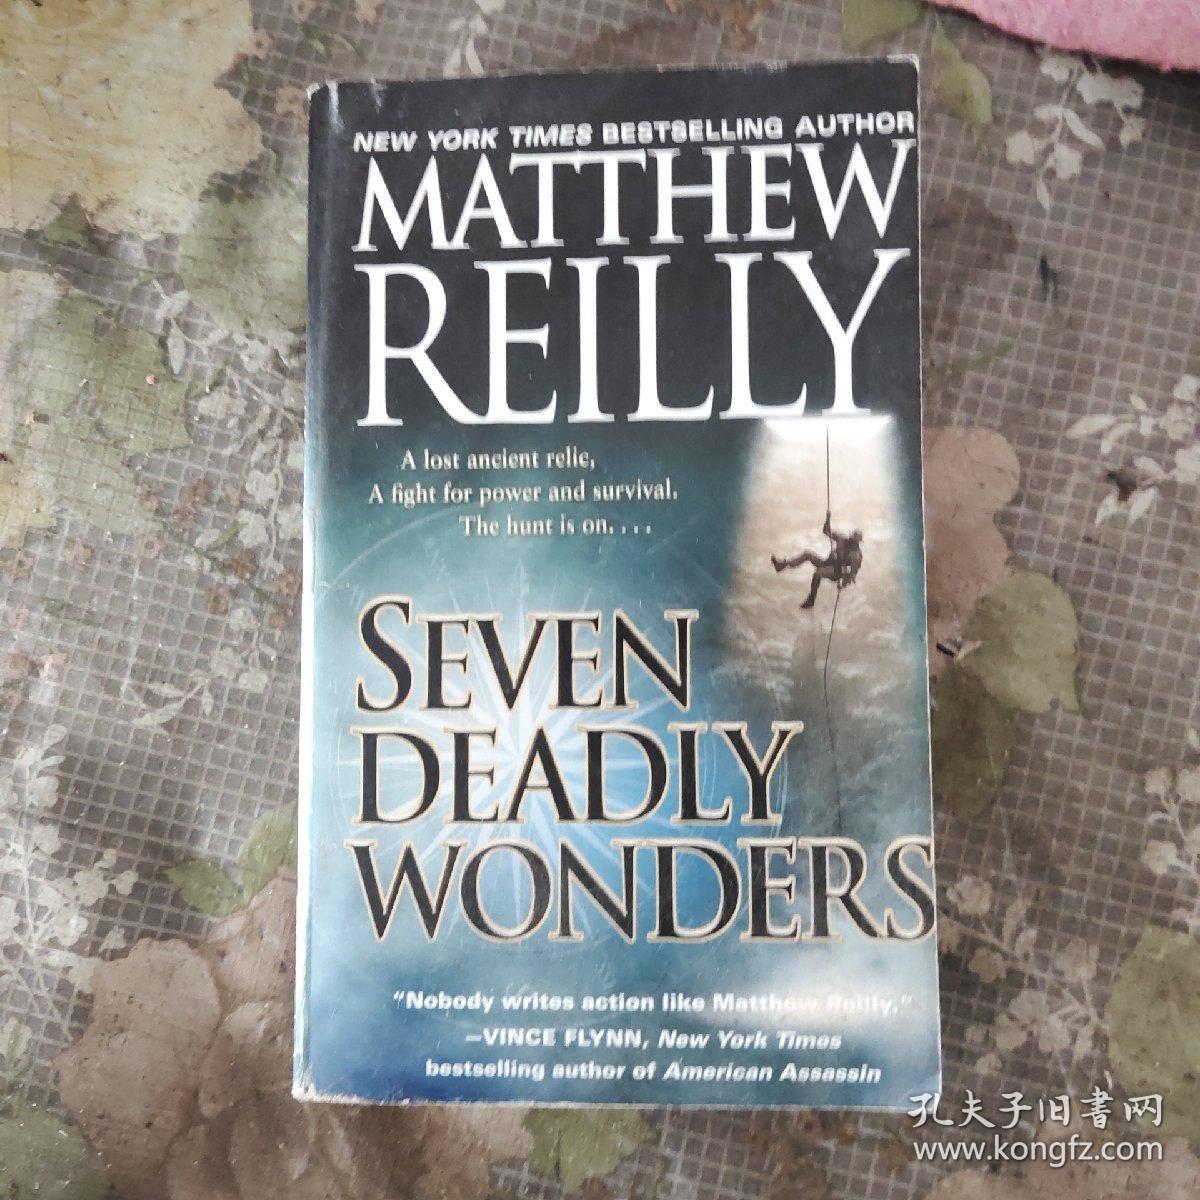 MATTHEW
REILLY
SEVEN
DEADLY
WONDERS